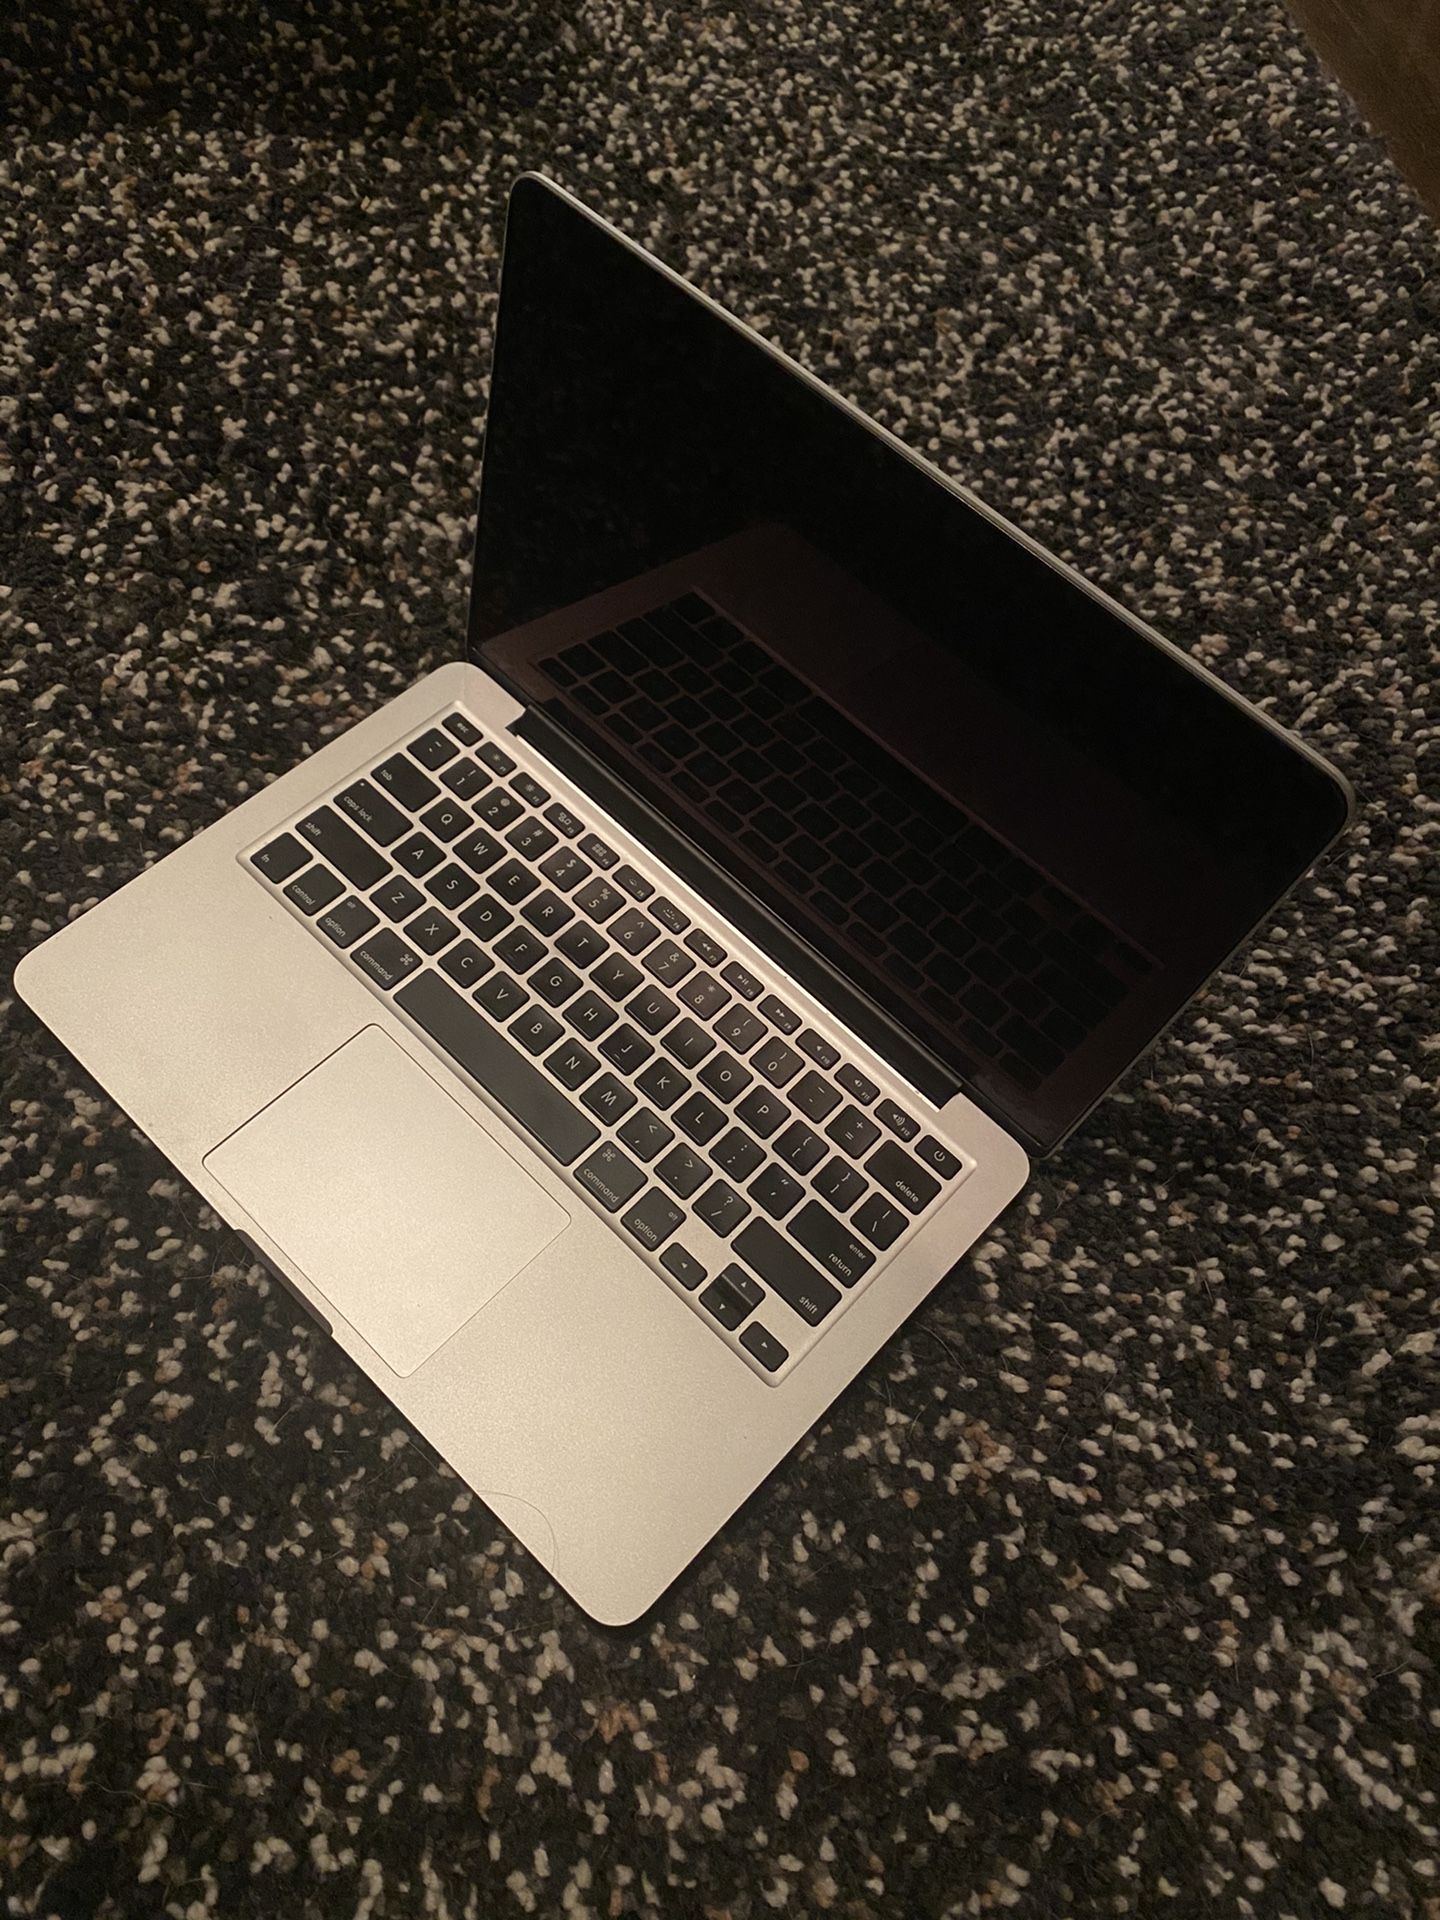 MacBook Pro (late 2013) 4gb / 128 Ssd